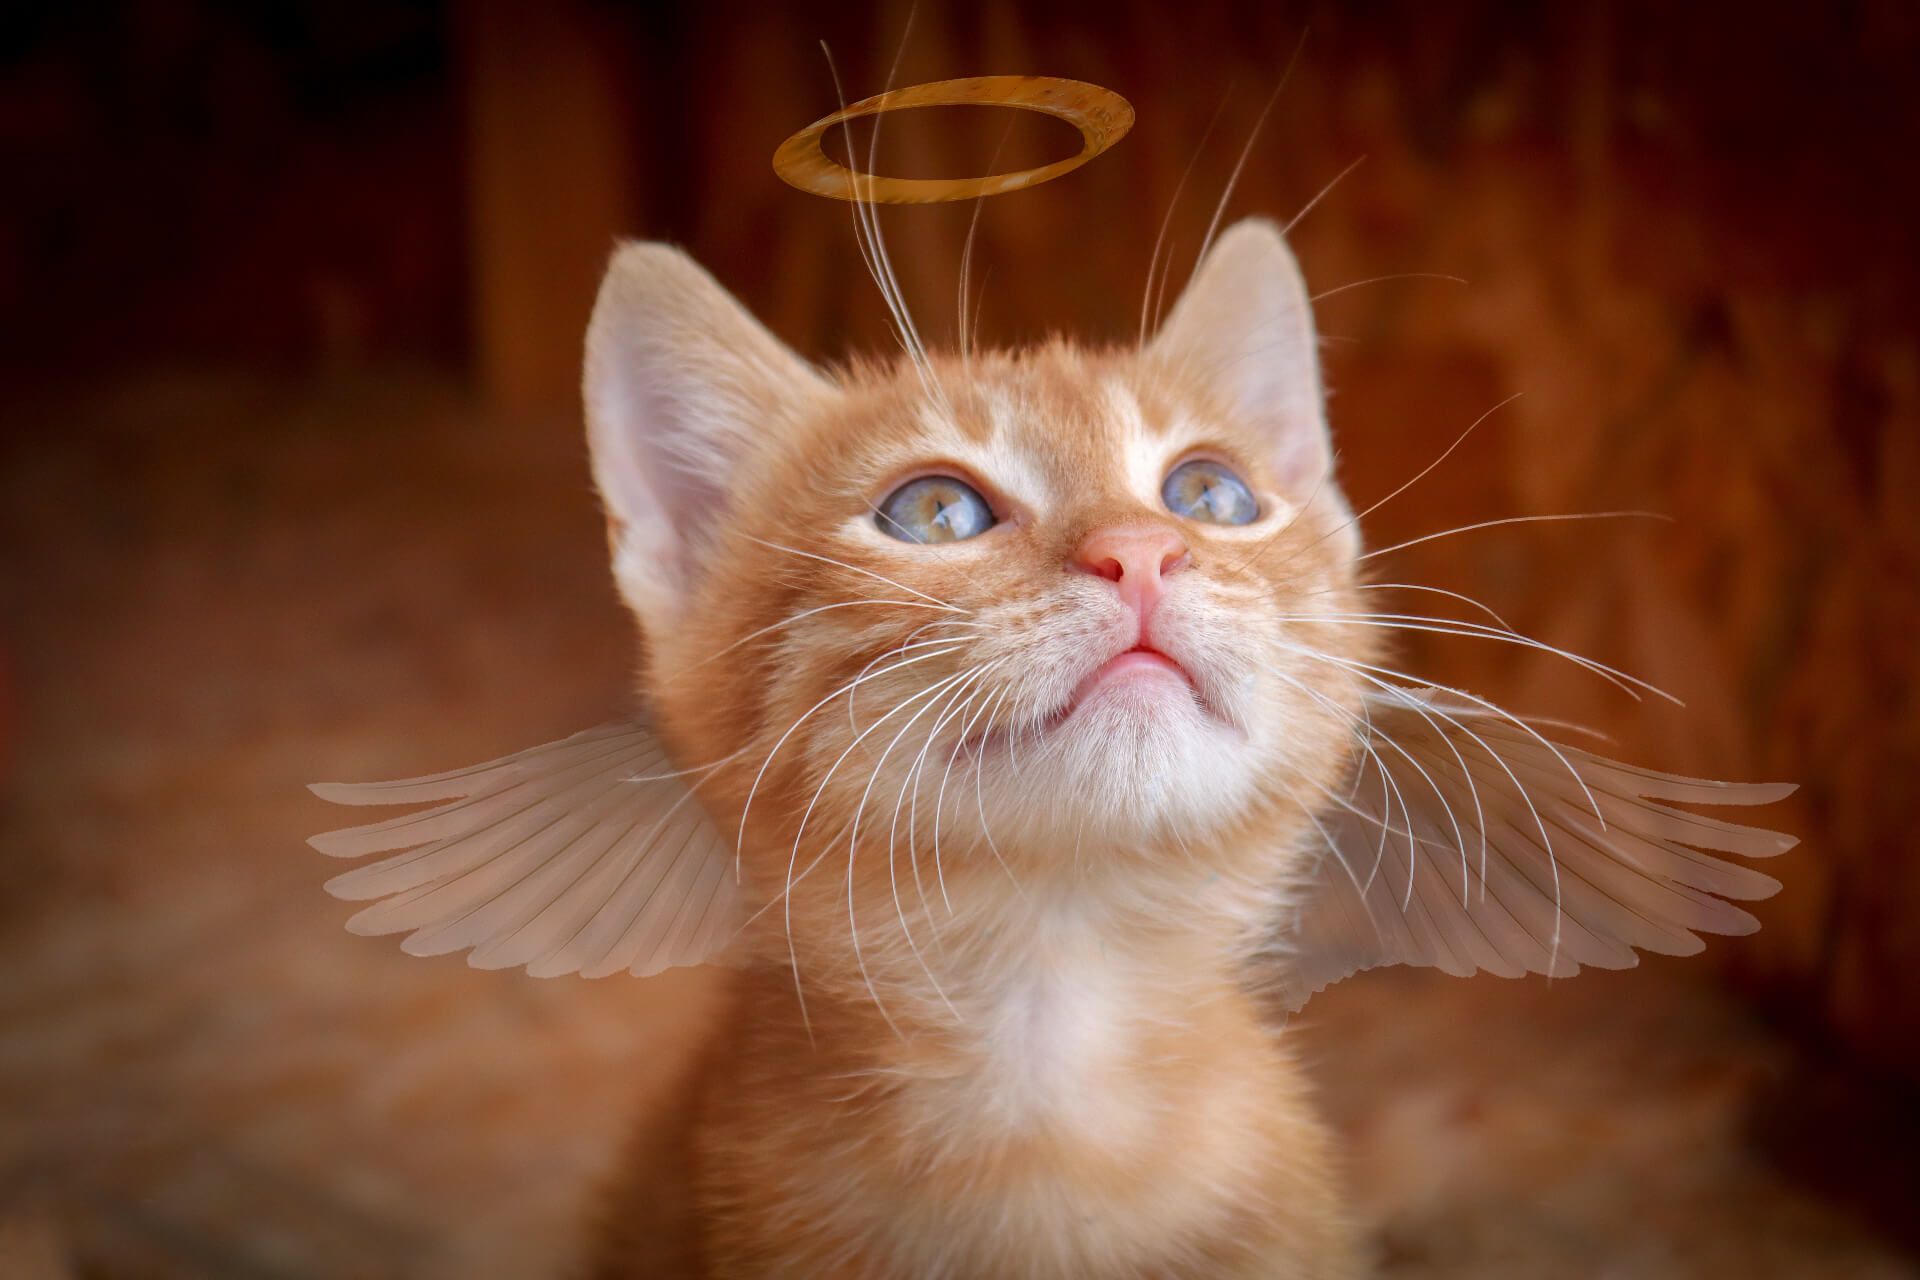 Angel cat wallpaper